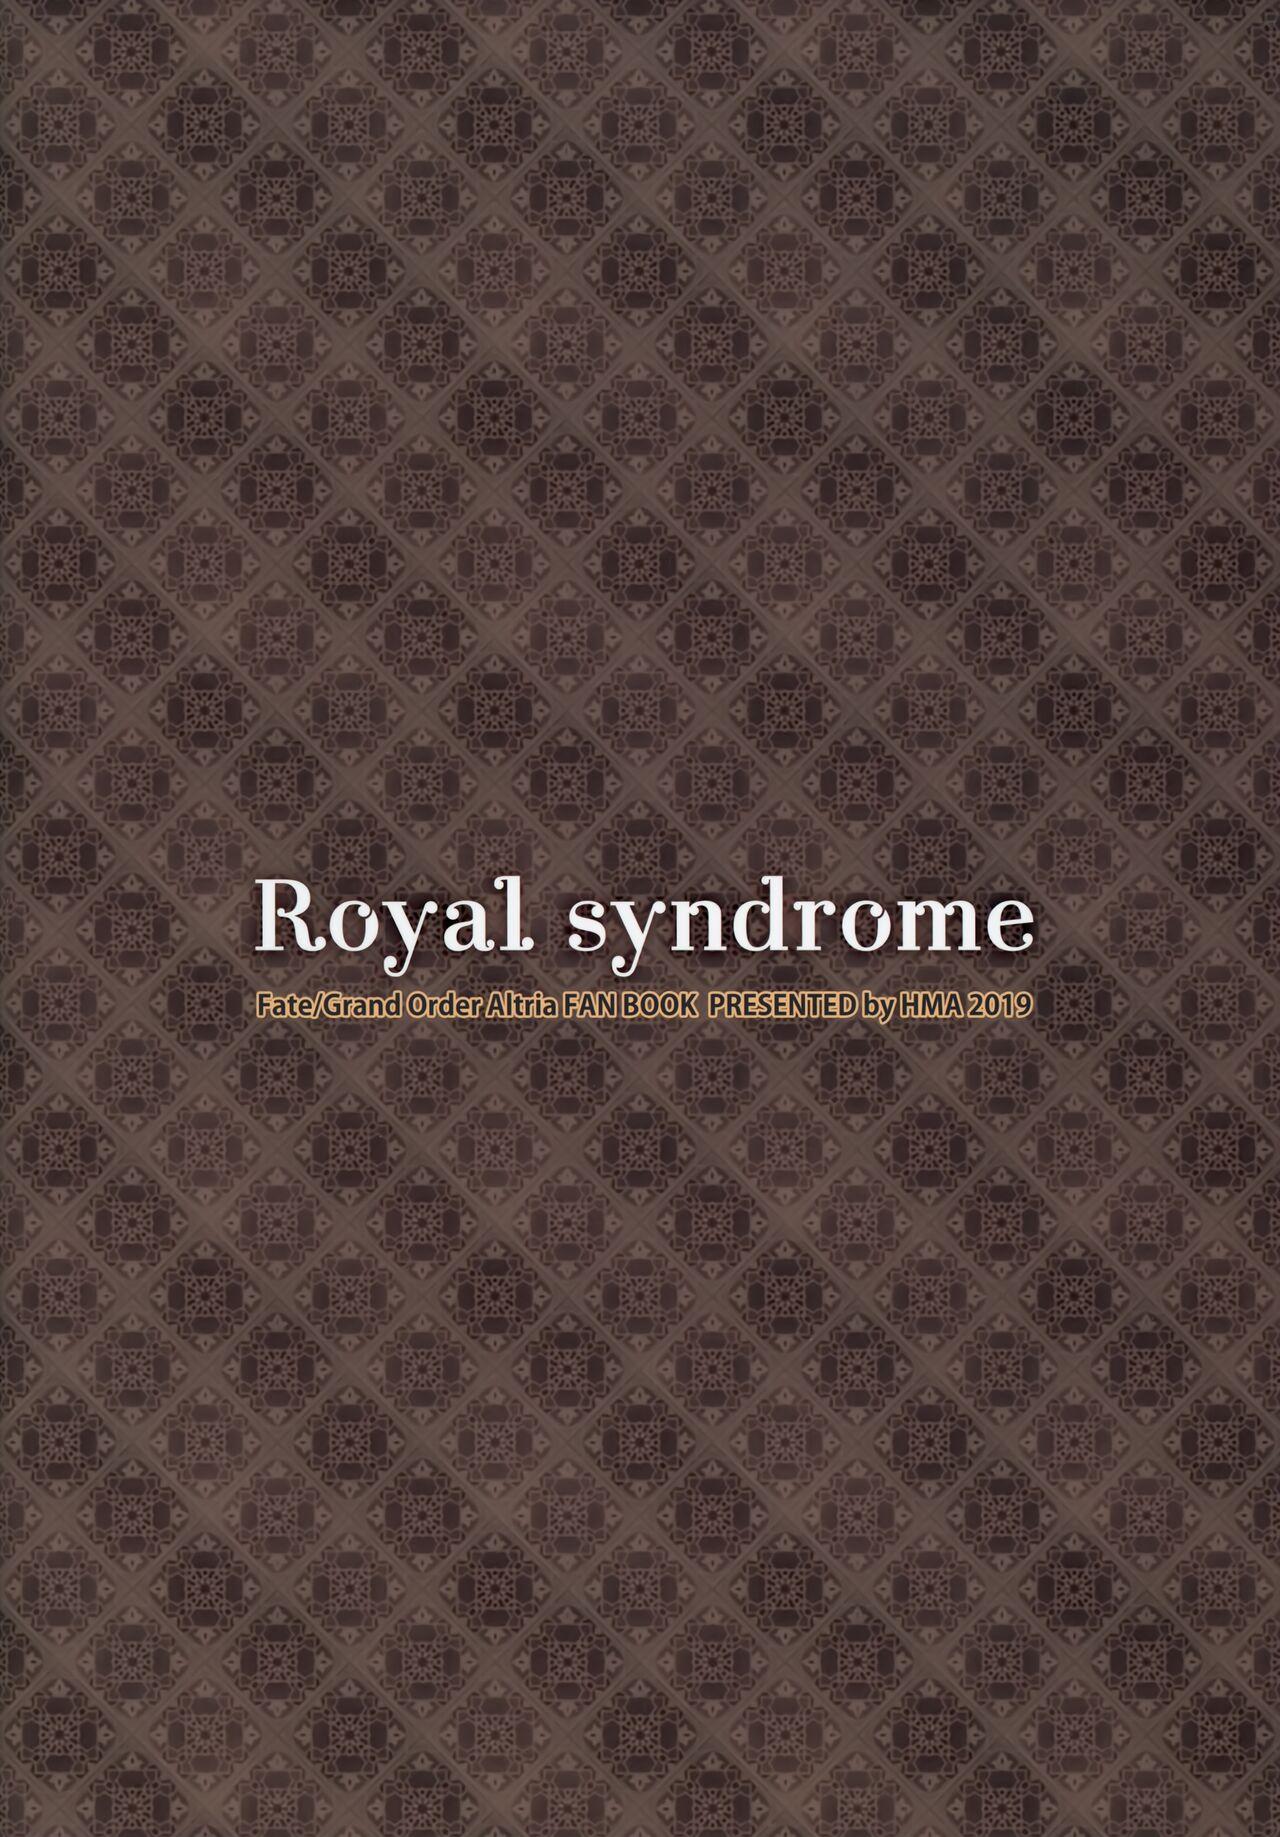 Royal syndrome 26